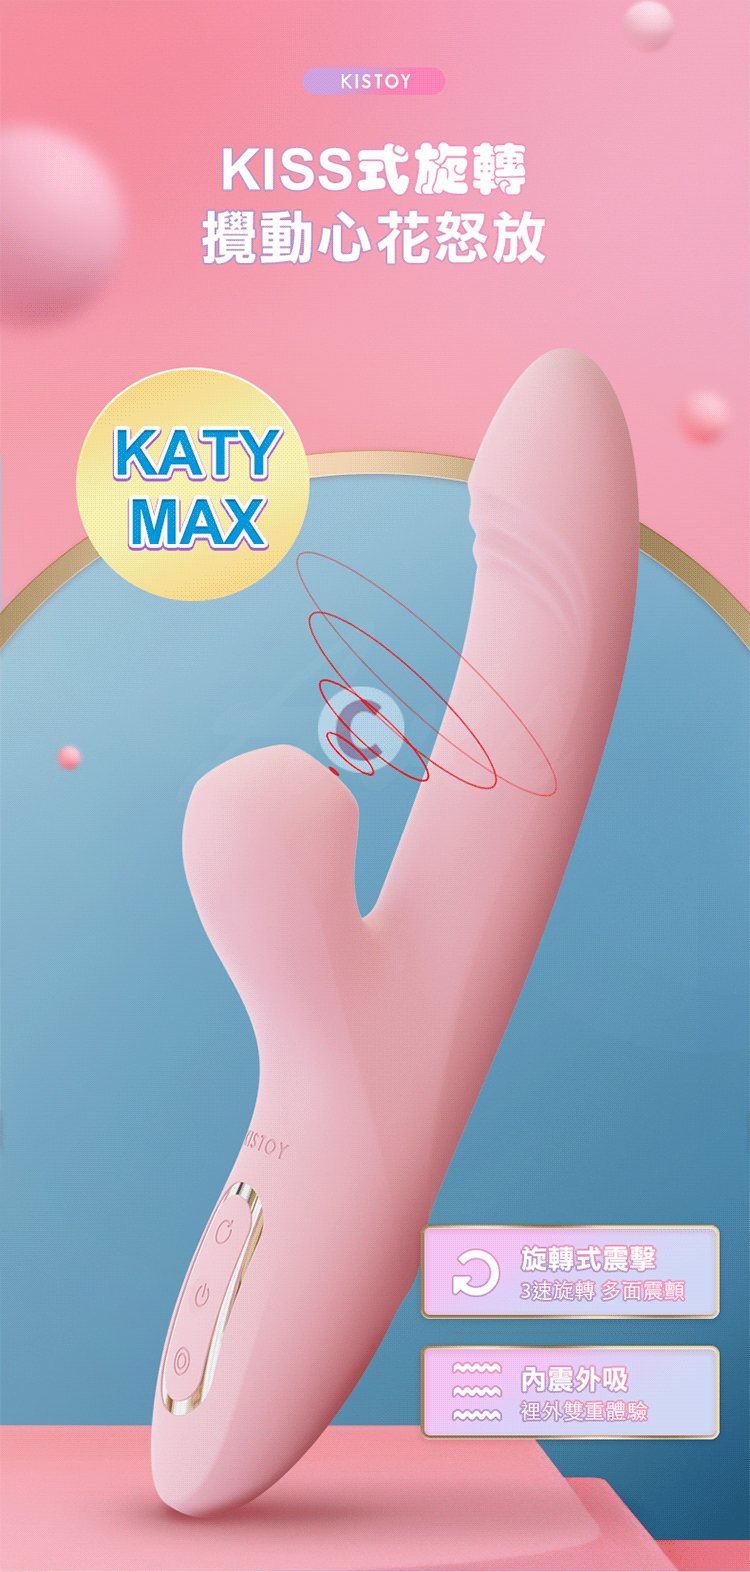 KISSTOY - Katy 智能加溫雙頭按摩棒